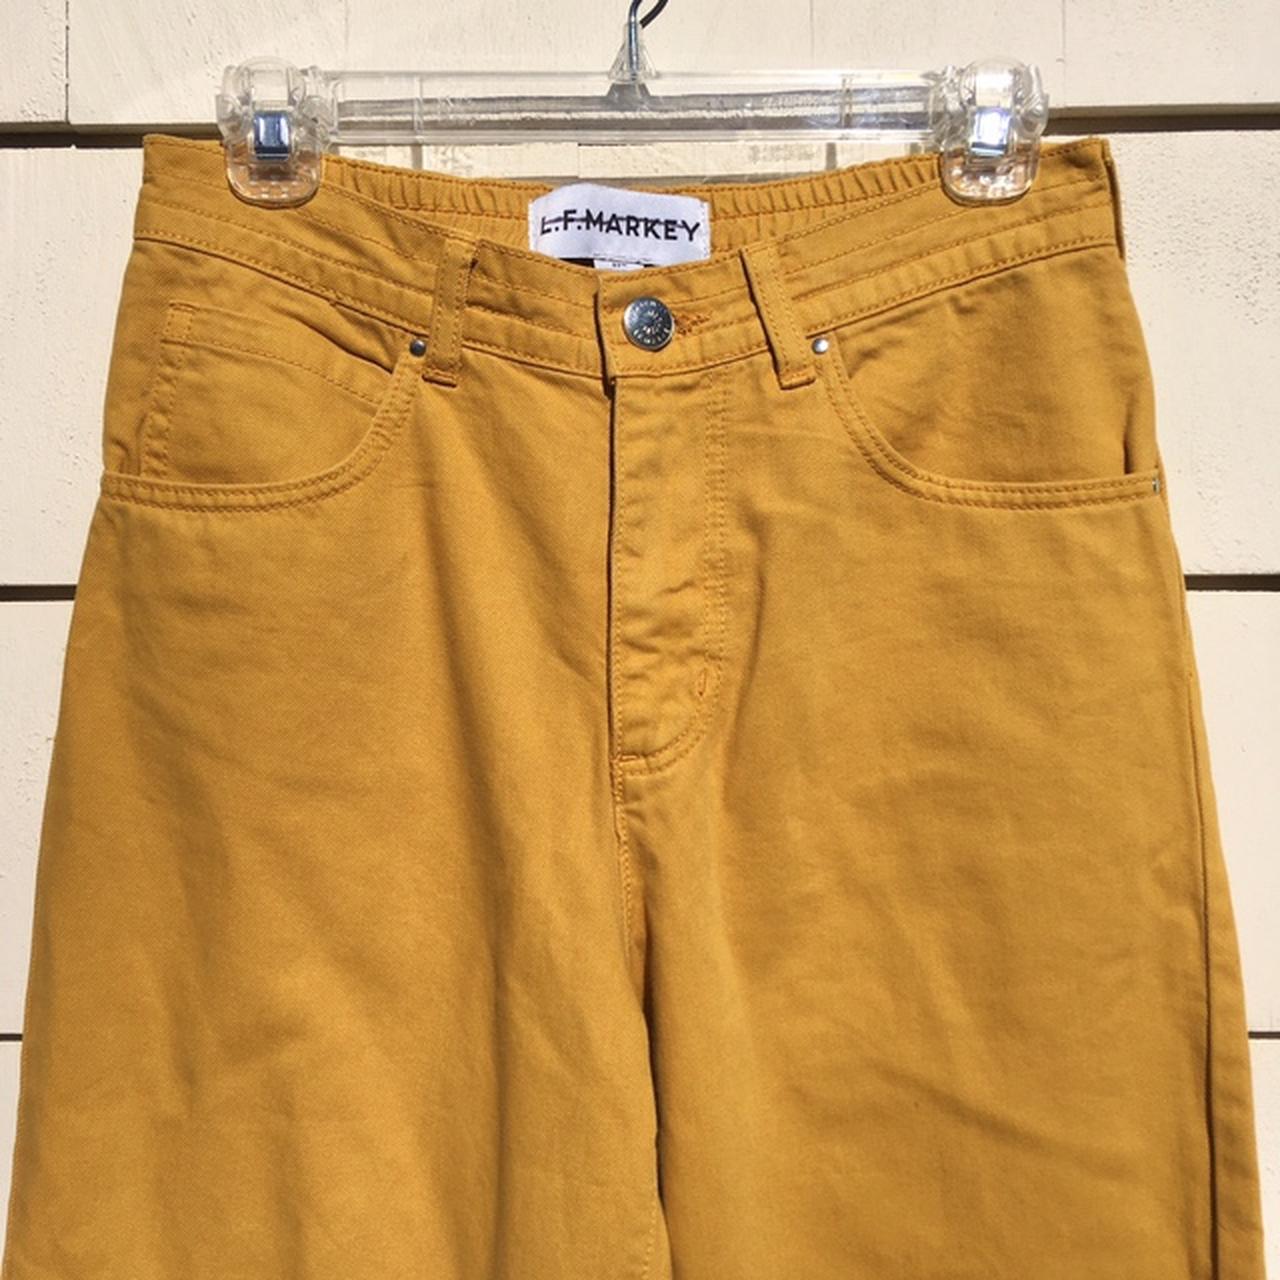 New L.F. Markey mustard yellow Johnny jeans. The... - Depop